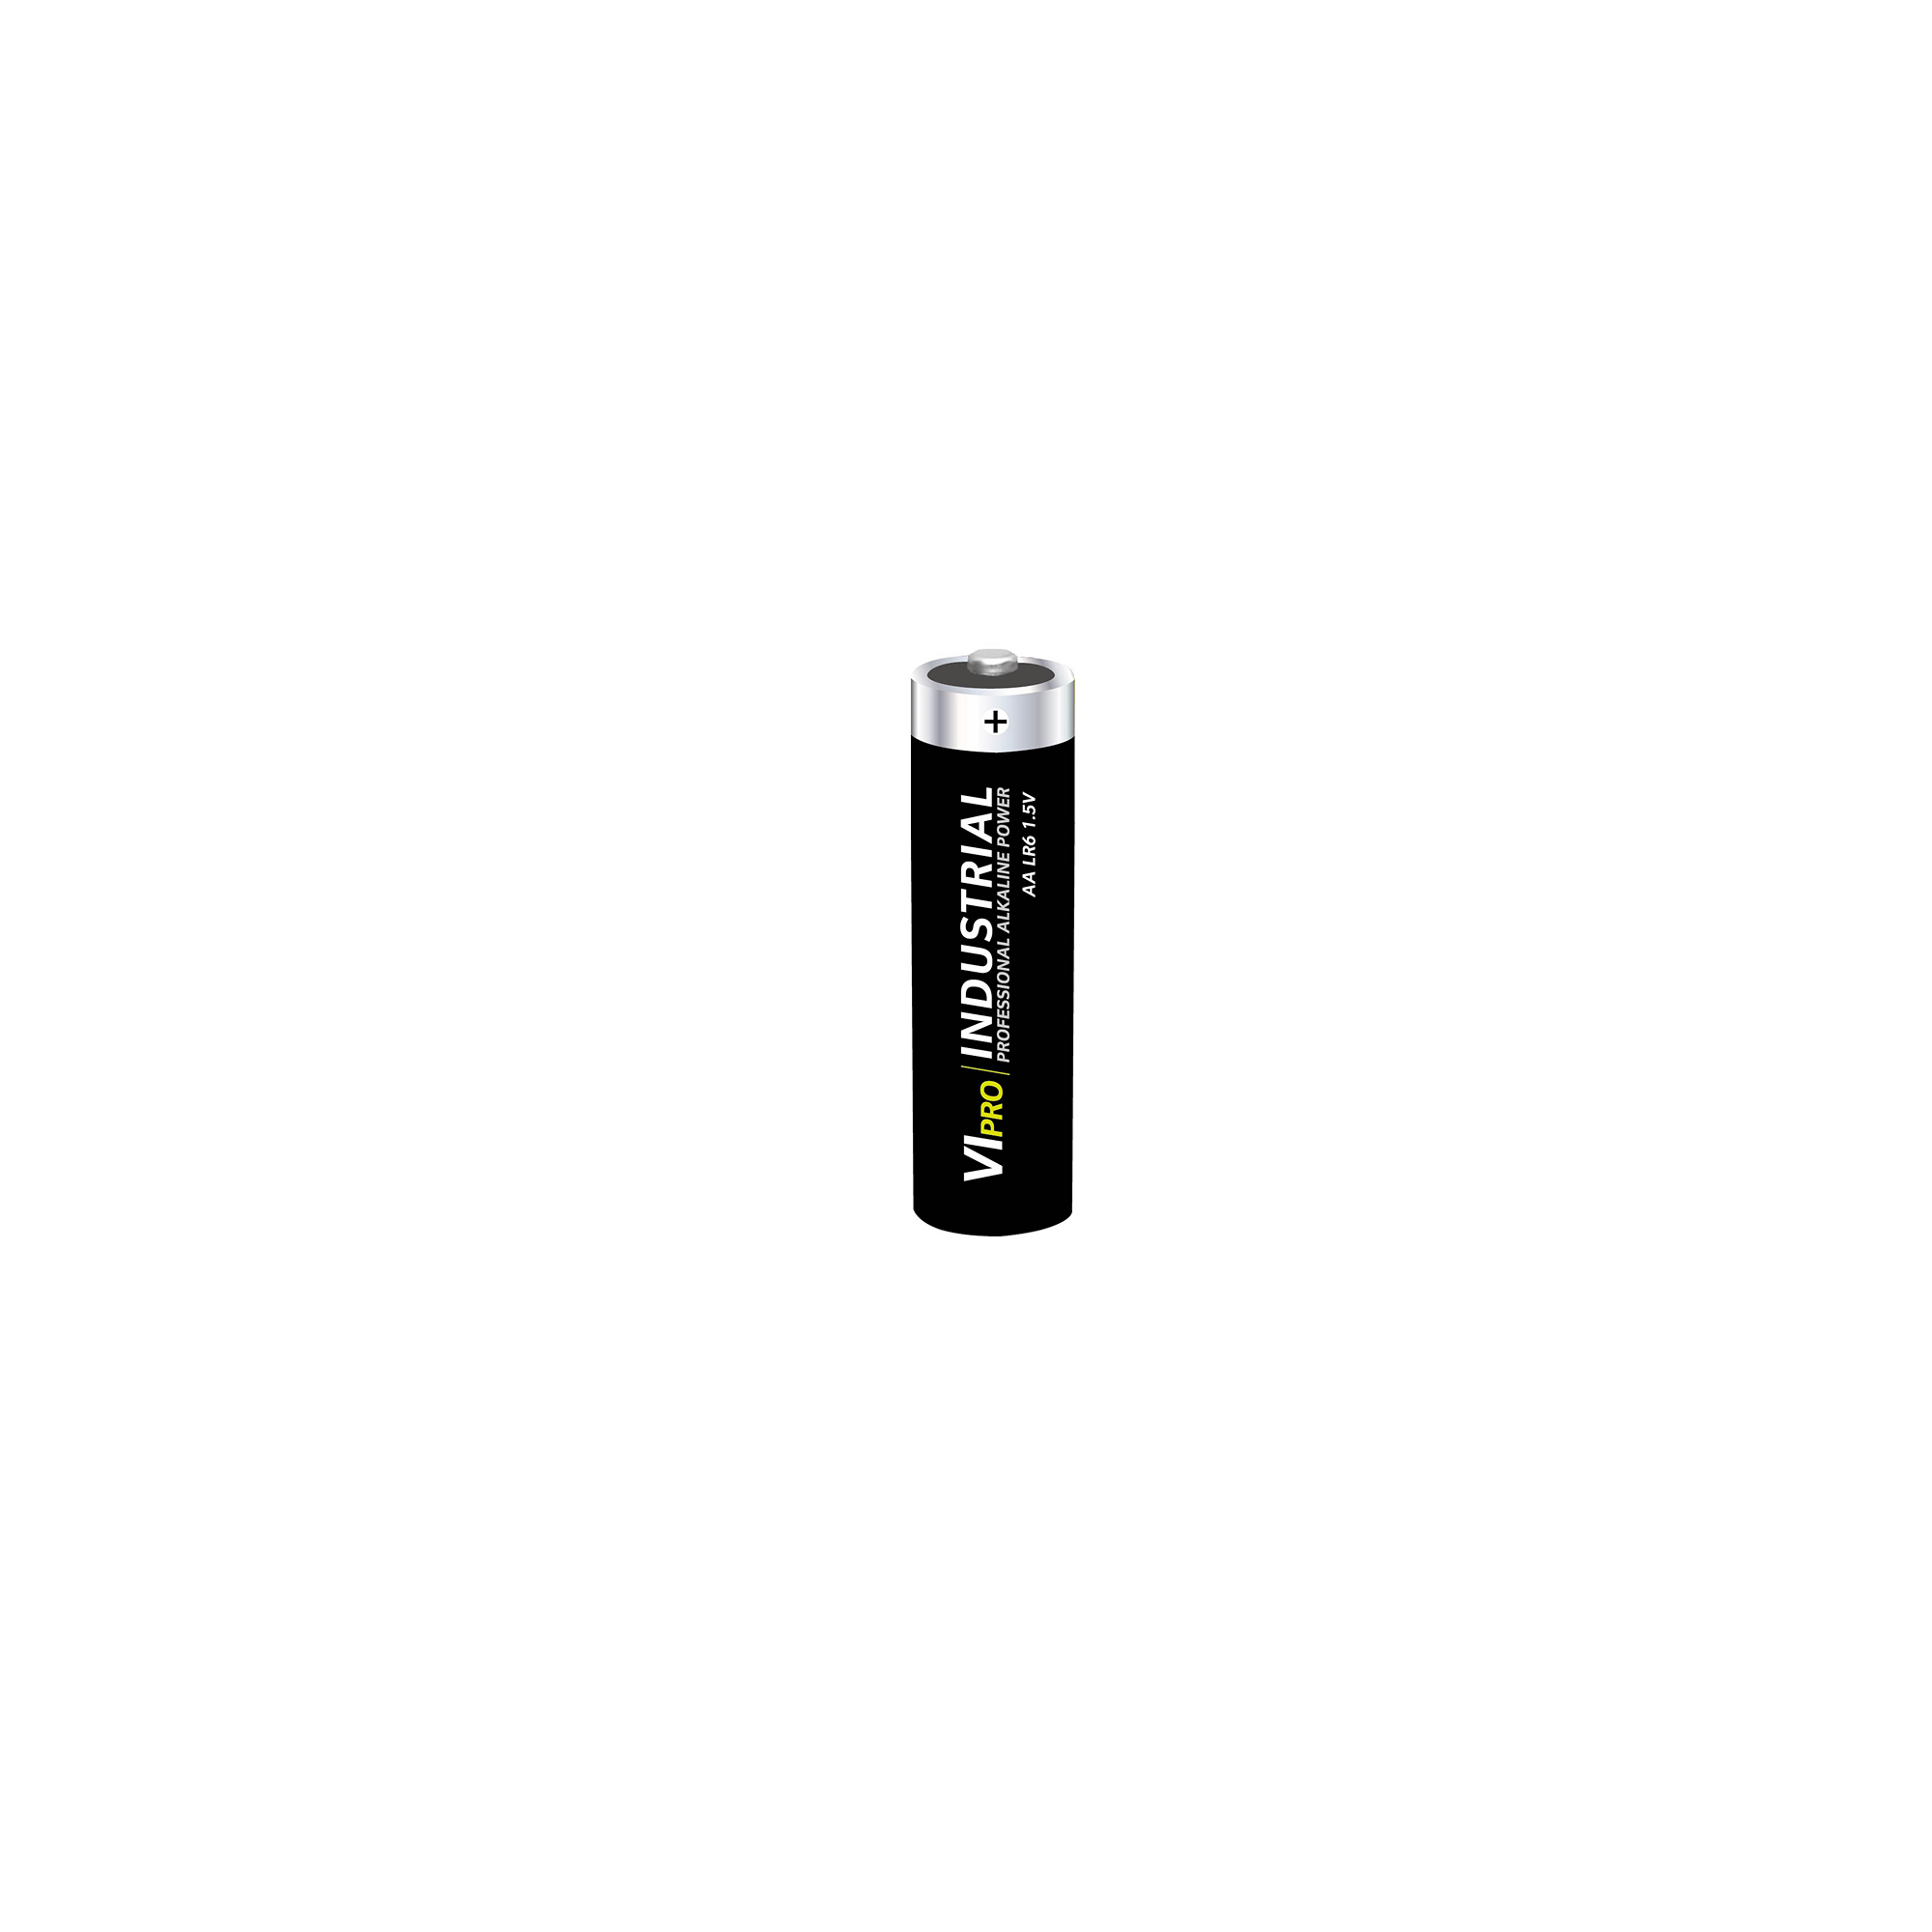 Vipro Professional Aa Batteries